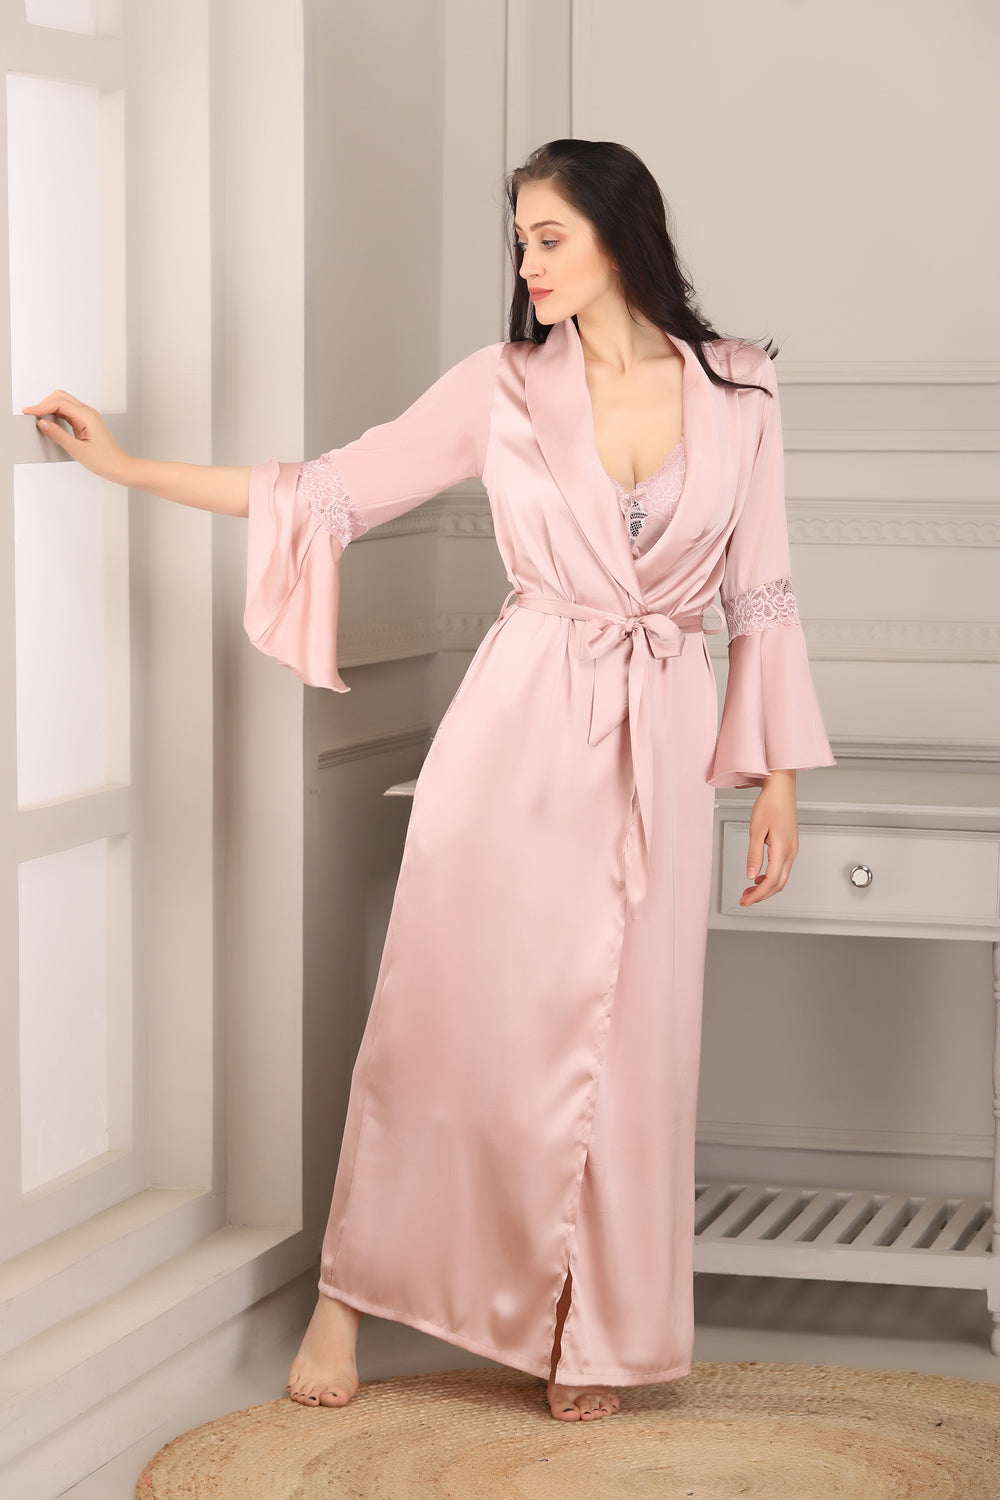 Robes Women Sleepwear Nightgowns Set Women Lingerie Evening Wear Deep V  Bathrobe Young Girl Sling (Grey Set Large) 